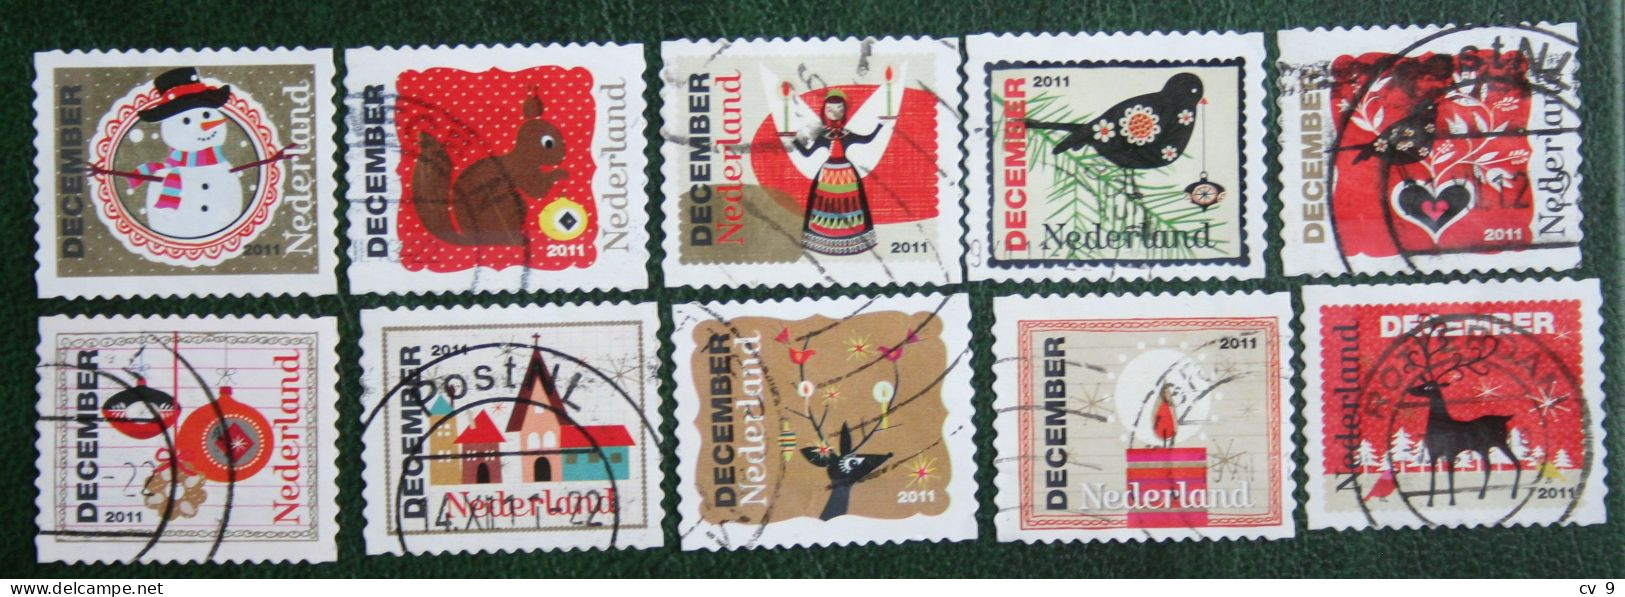 Decemberzegels Weihnachten Christmas Noel NVPH 2887-2896 (Mi 2929-2938) 2011 Gestempeld / USED NEDERLAND / NIEDERLANDE - Used Stamps